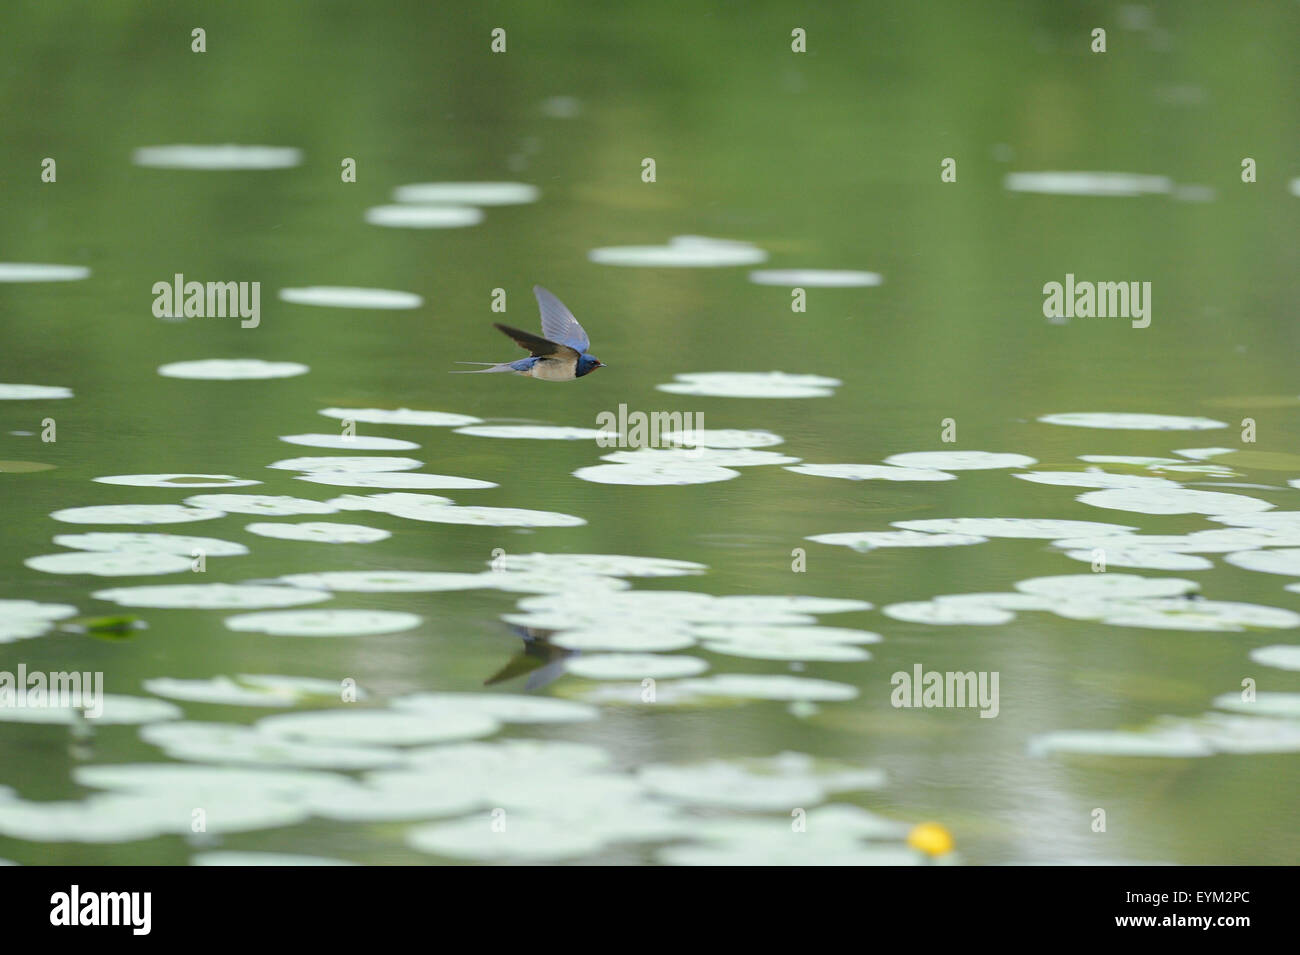 Swallow, Hirundo rustica, over a lake flying, Stock Photo